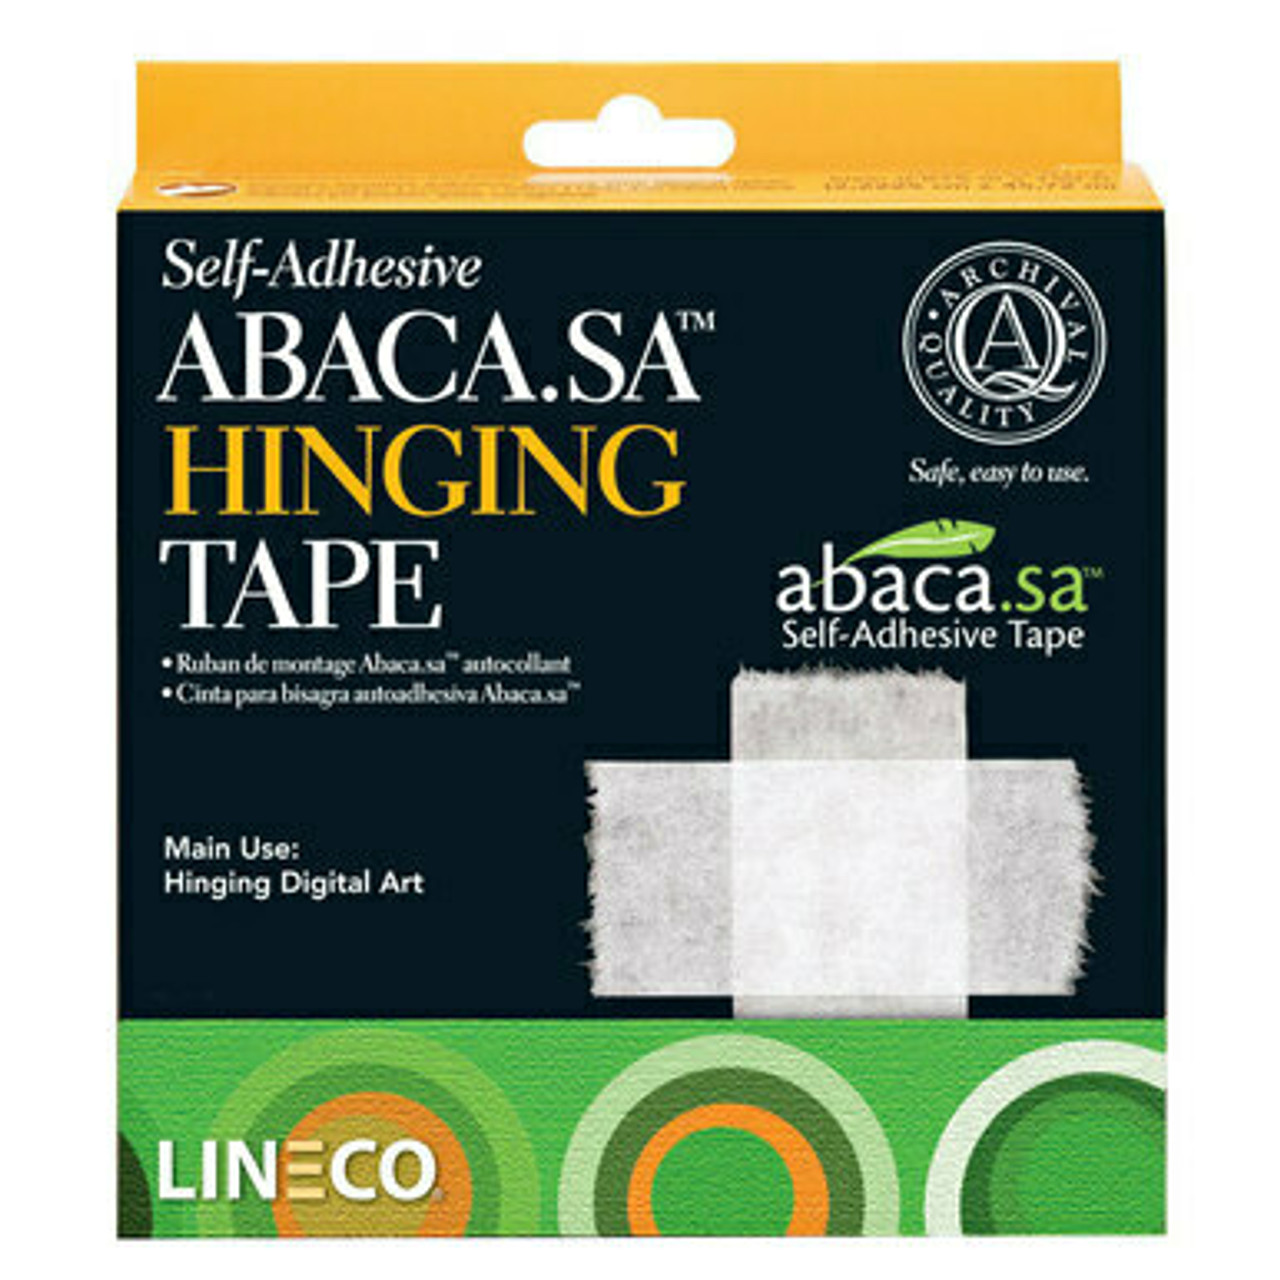 Lineco-ABACA SA HINGING TAPE 20MM X 3.6M 533-0754M